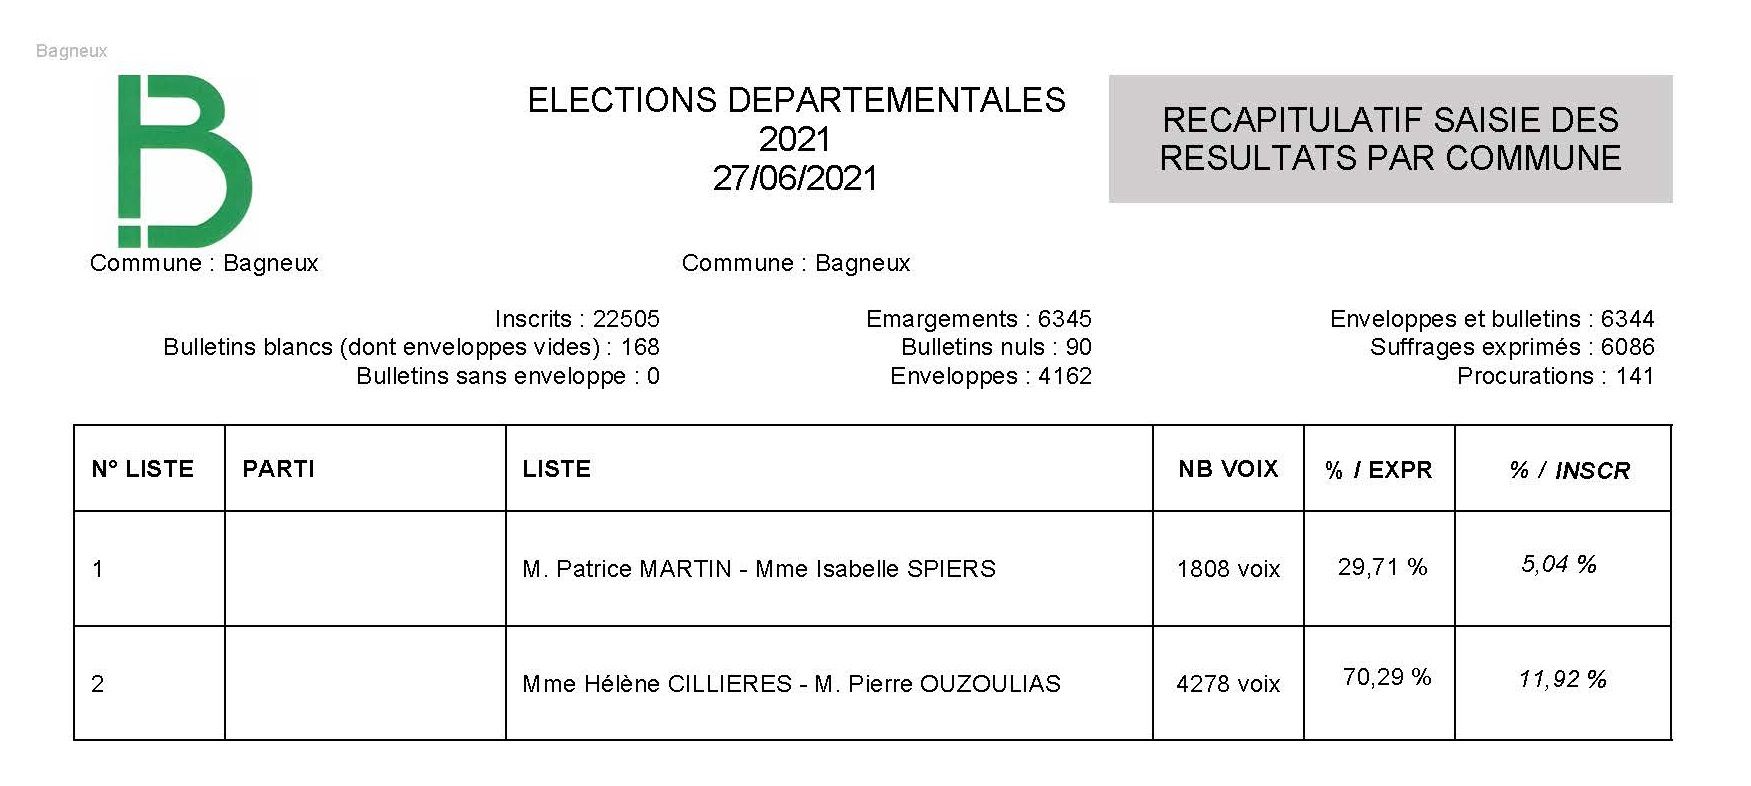 Elections Departementales 2021 Récapitulatif Bagneux v2